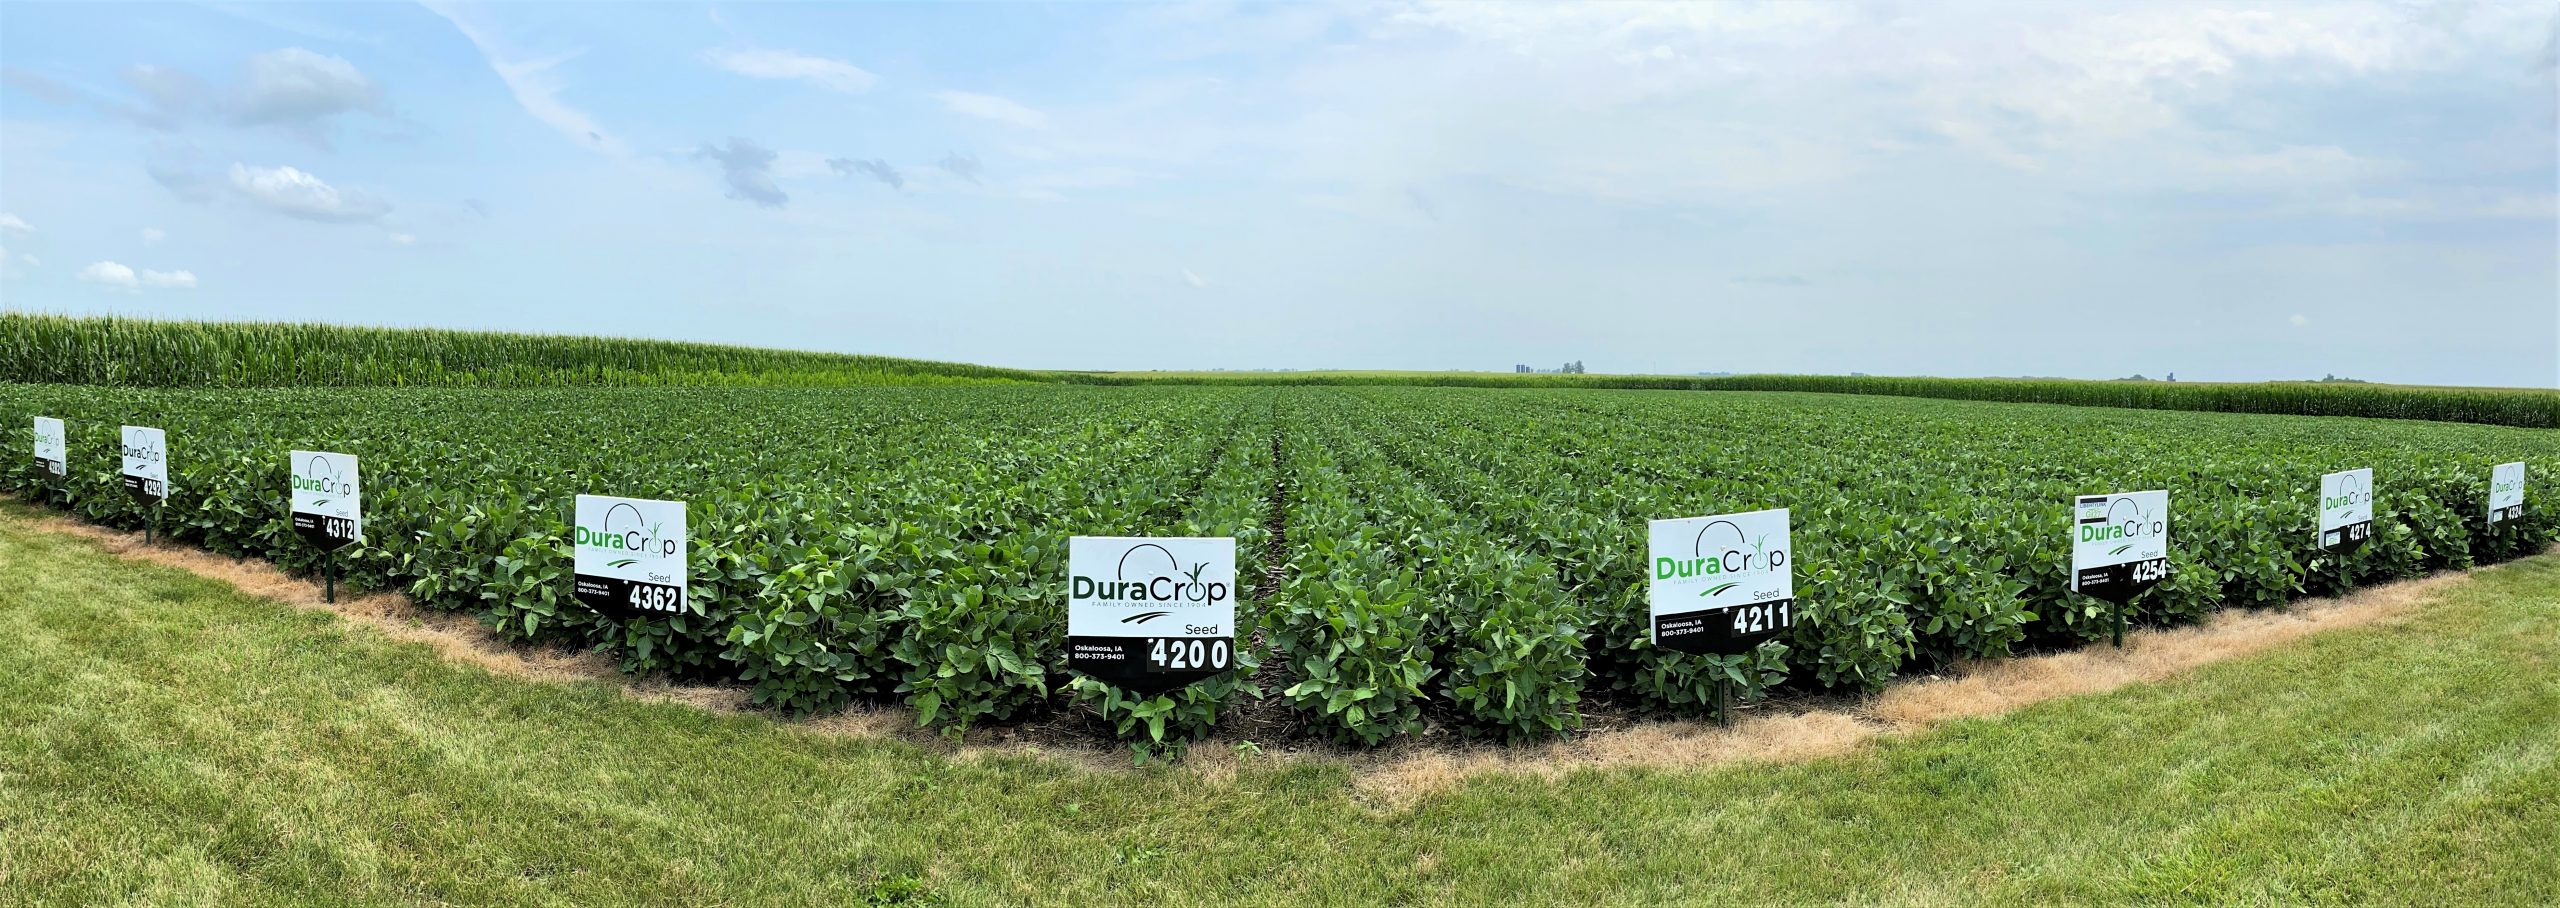 Duracrop soybean plot